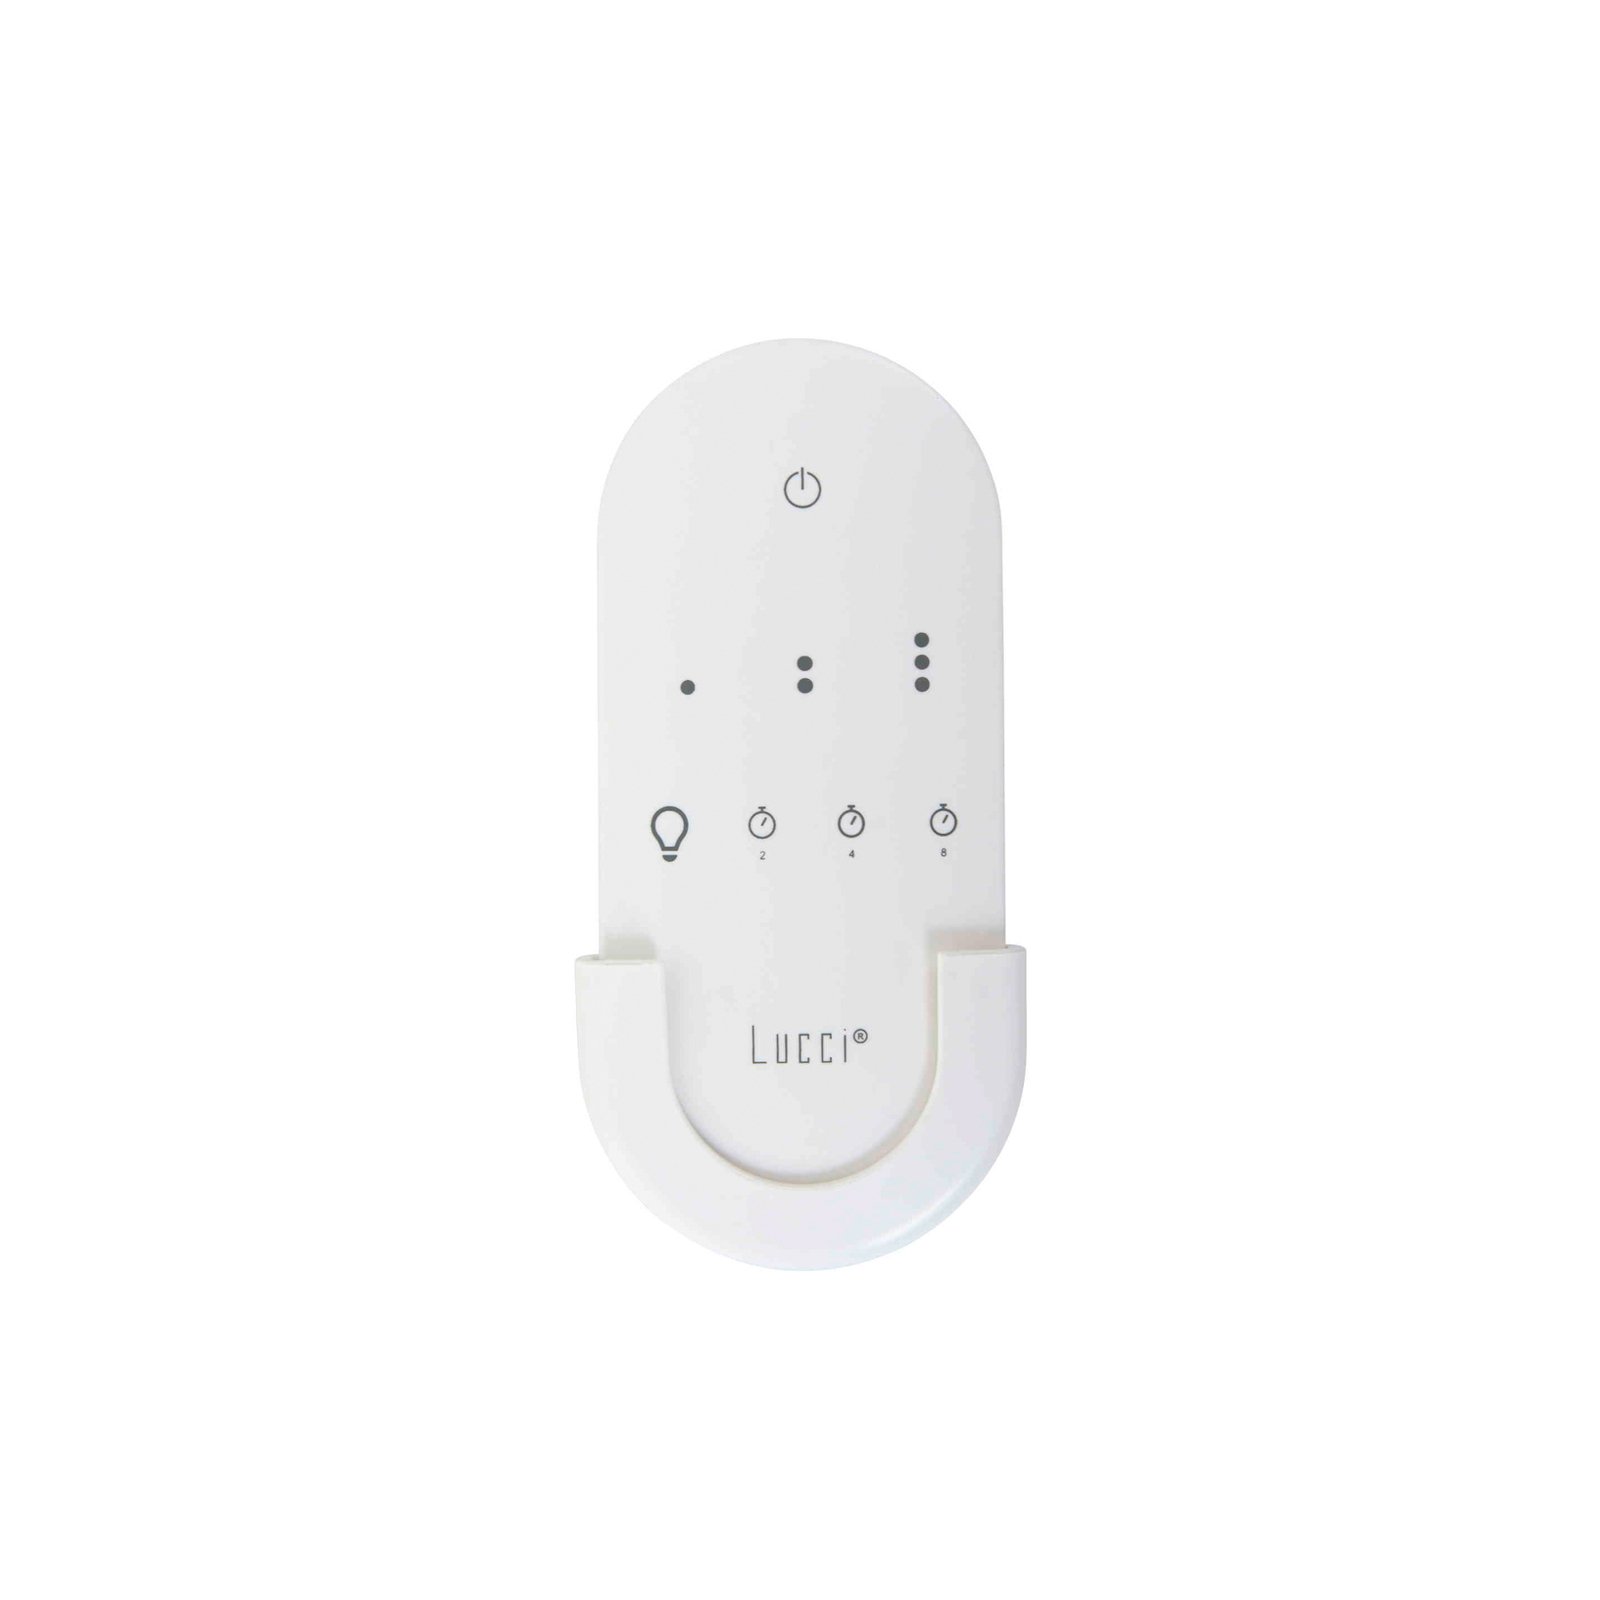 Beacon Lucci Touch remote control white for AC fan